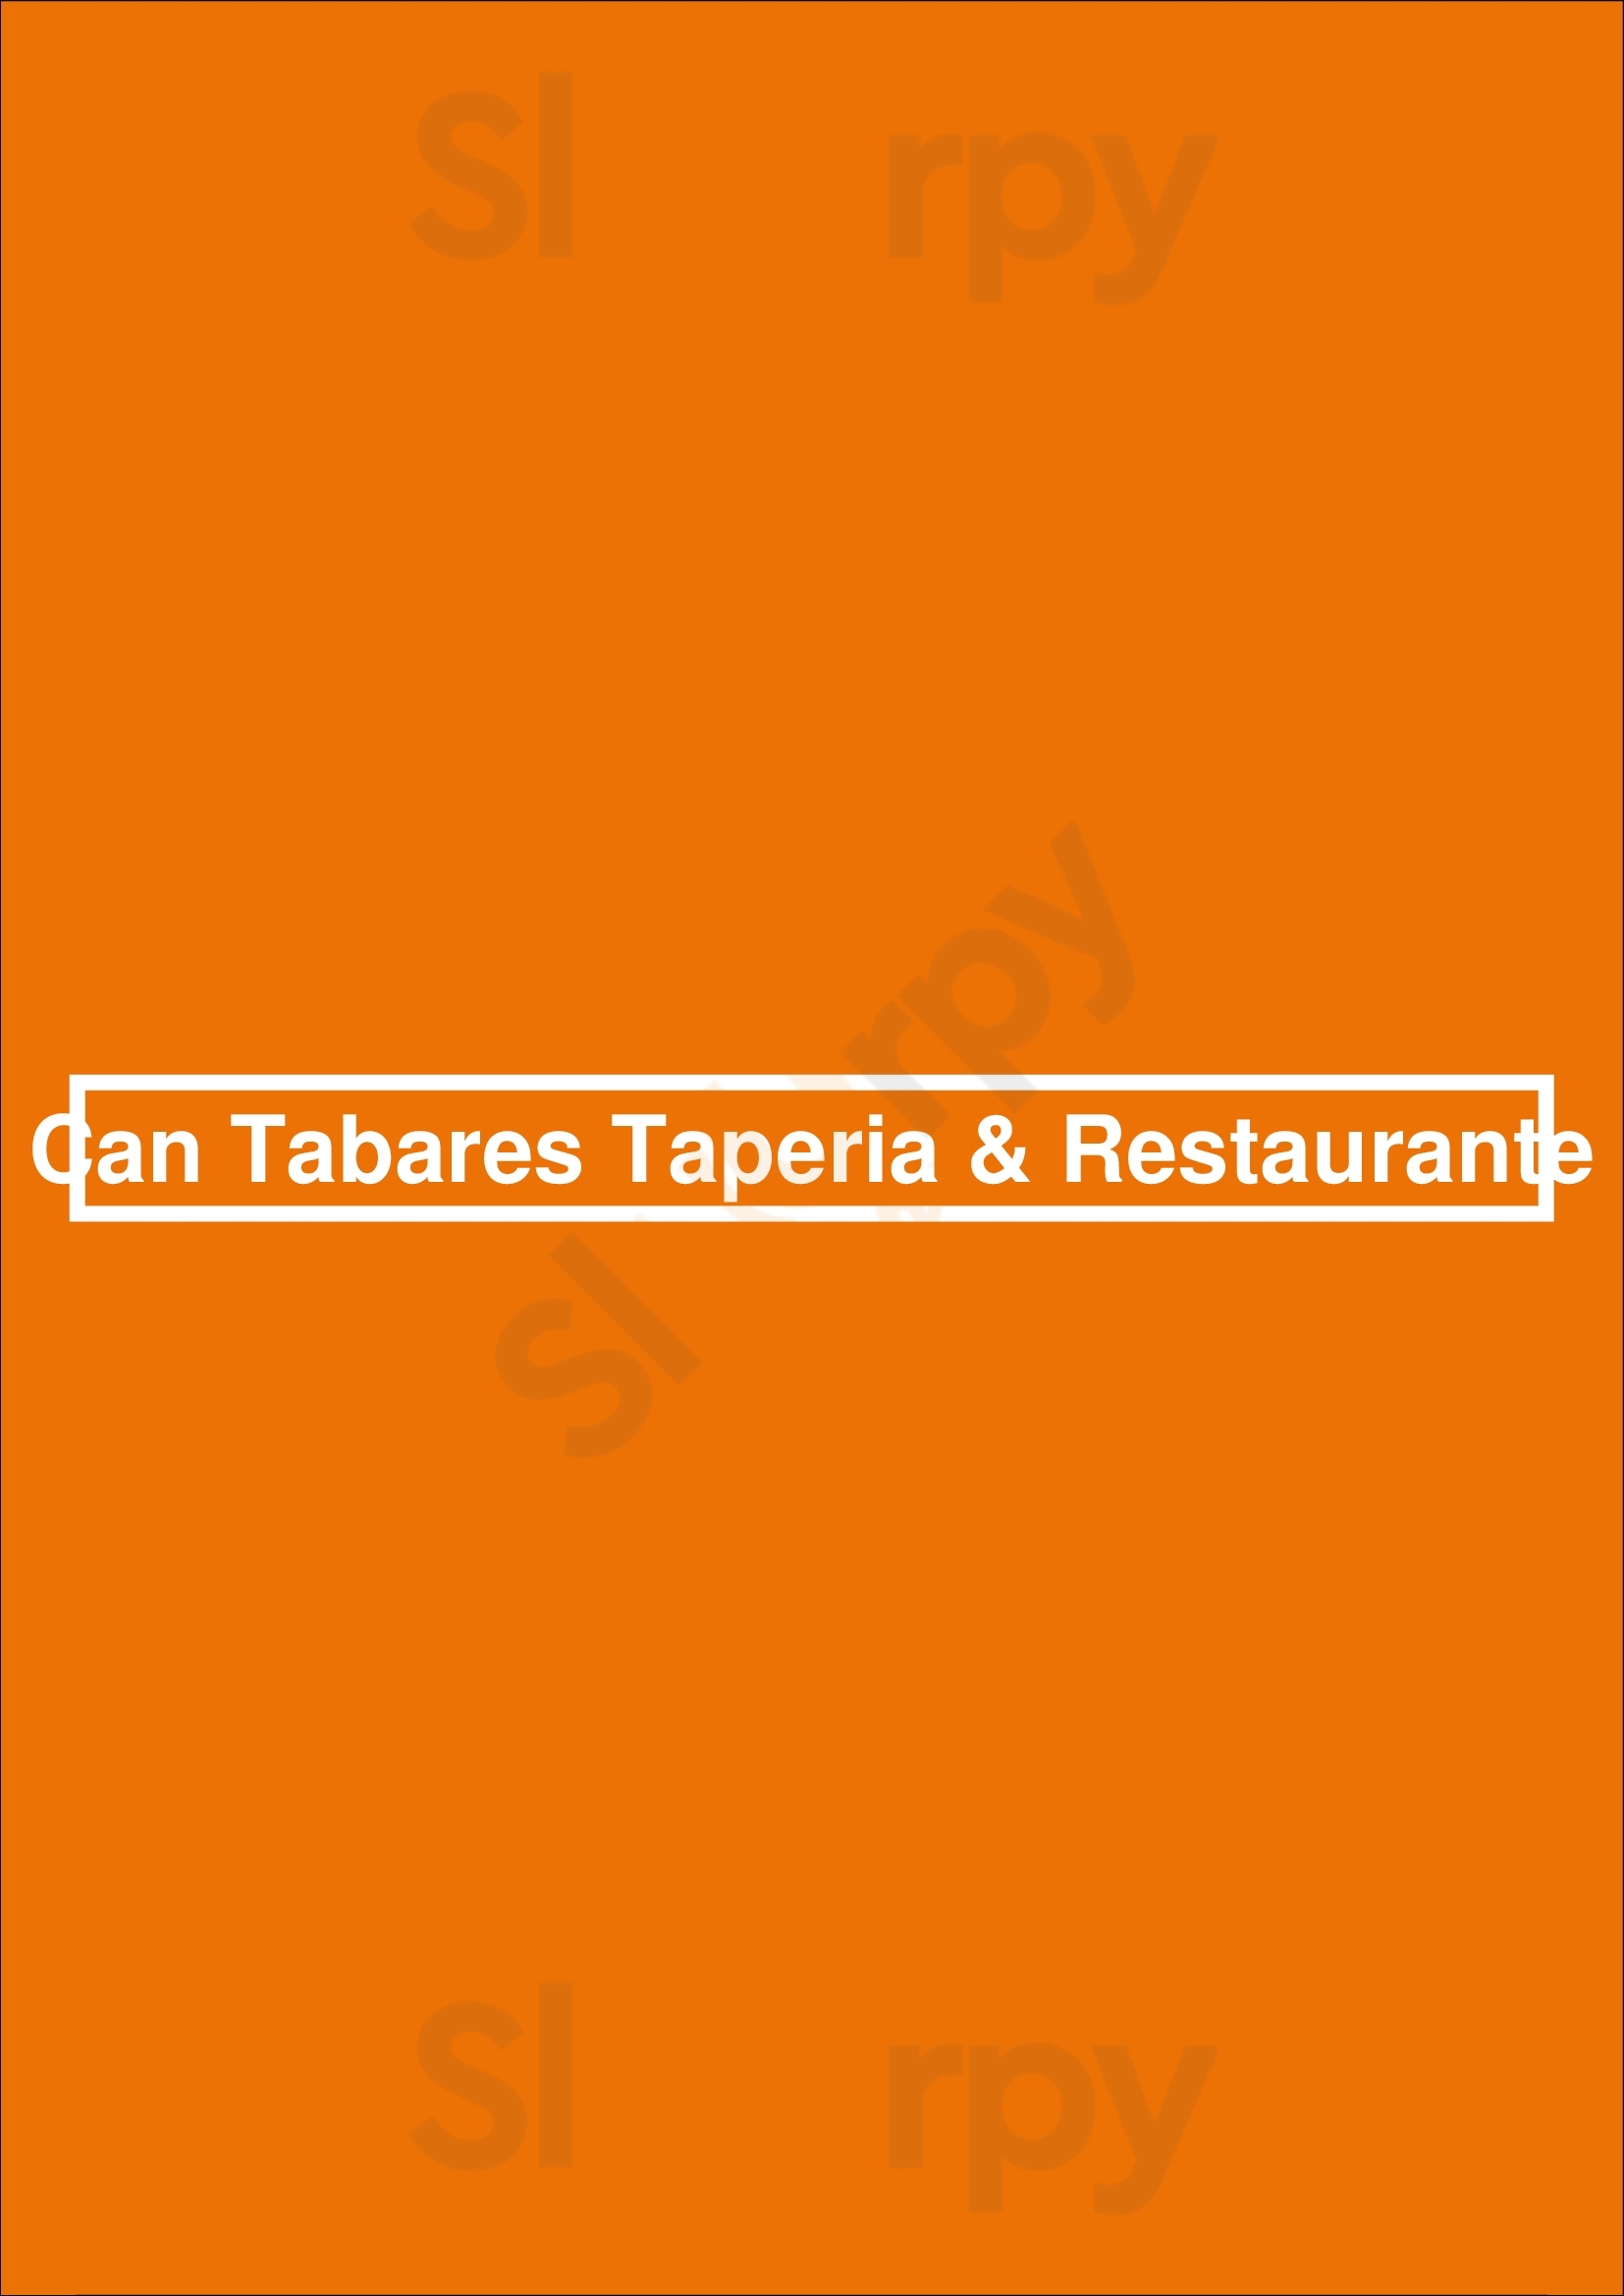 Can Tabares Taperia & Restaurante Mont-roig del Camp Menu - 1